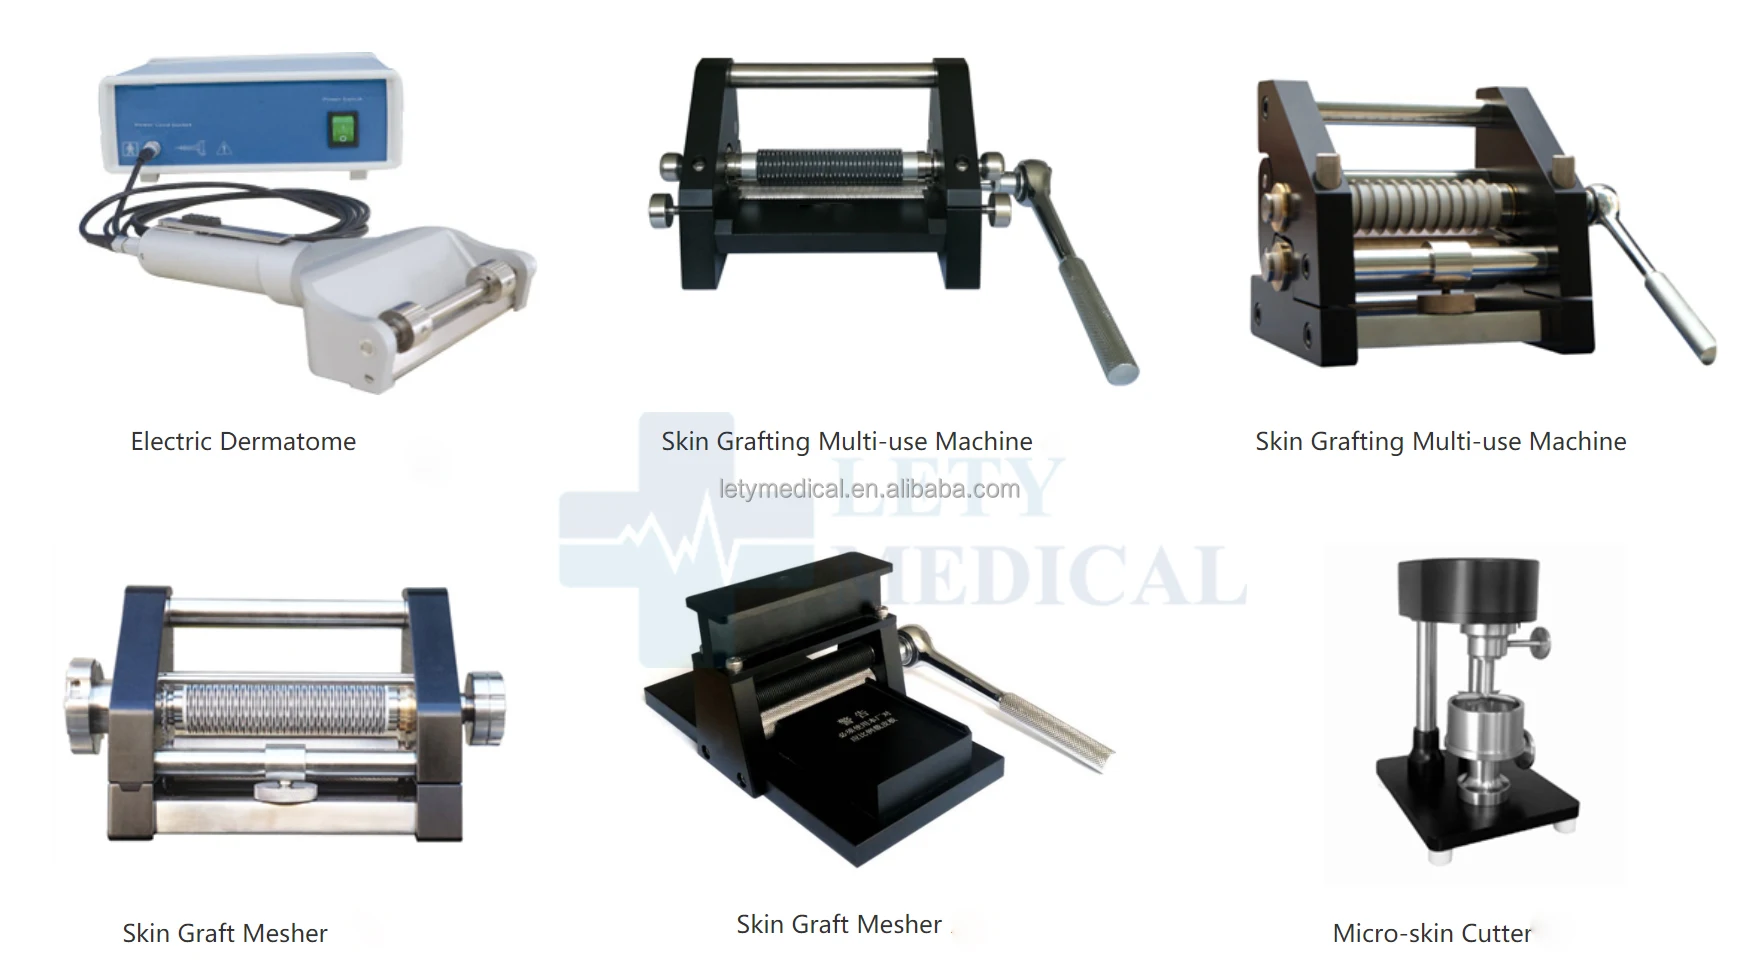 Micro-skin Cutter Skin Graft Mesher Skin Grafting Multi-use Machine